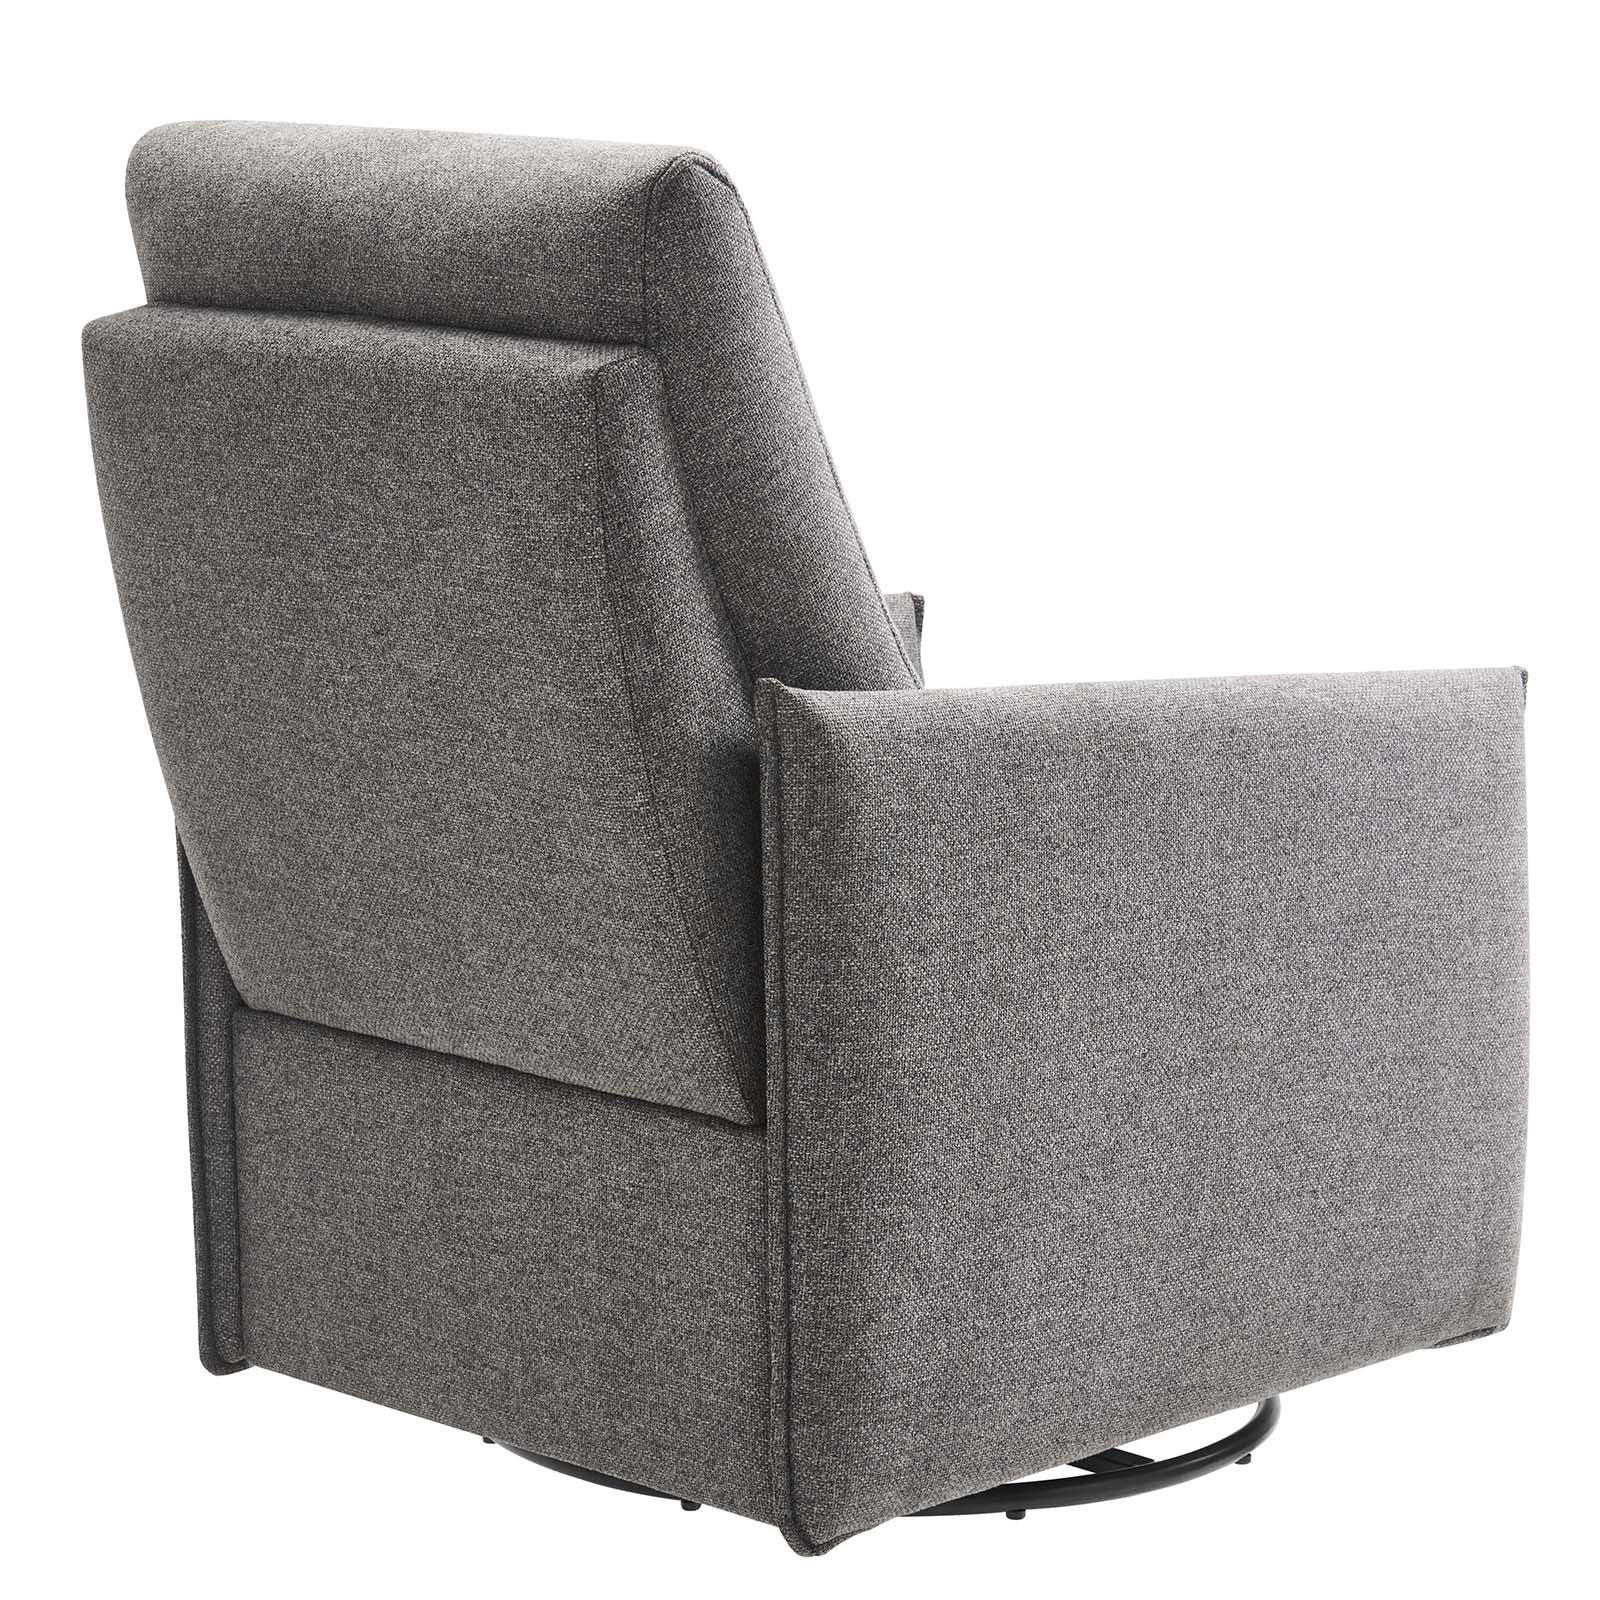 Etta Upholstered Fabric Lounge Chair - East Shore Modern Home Furnishings